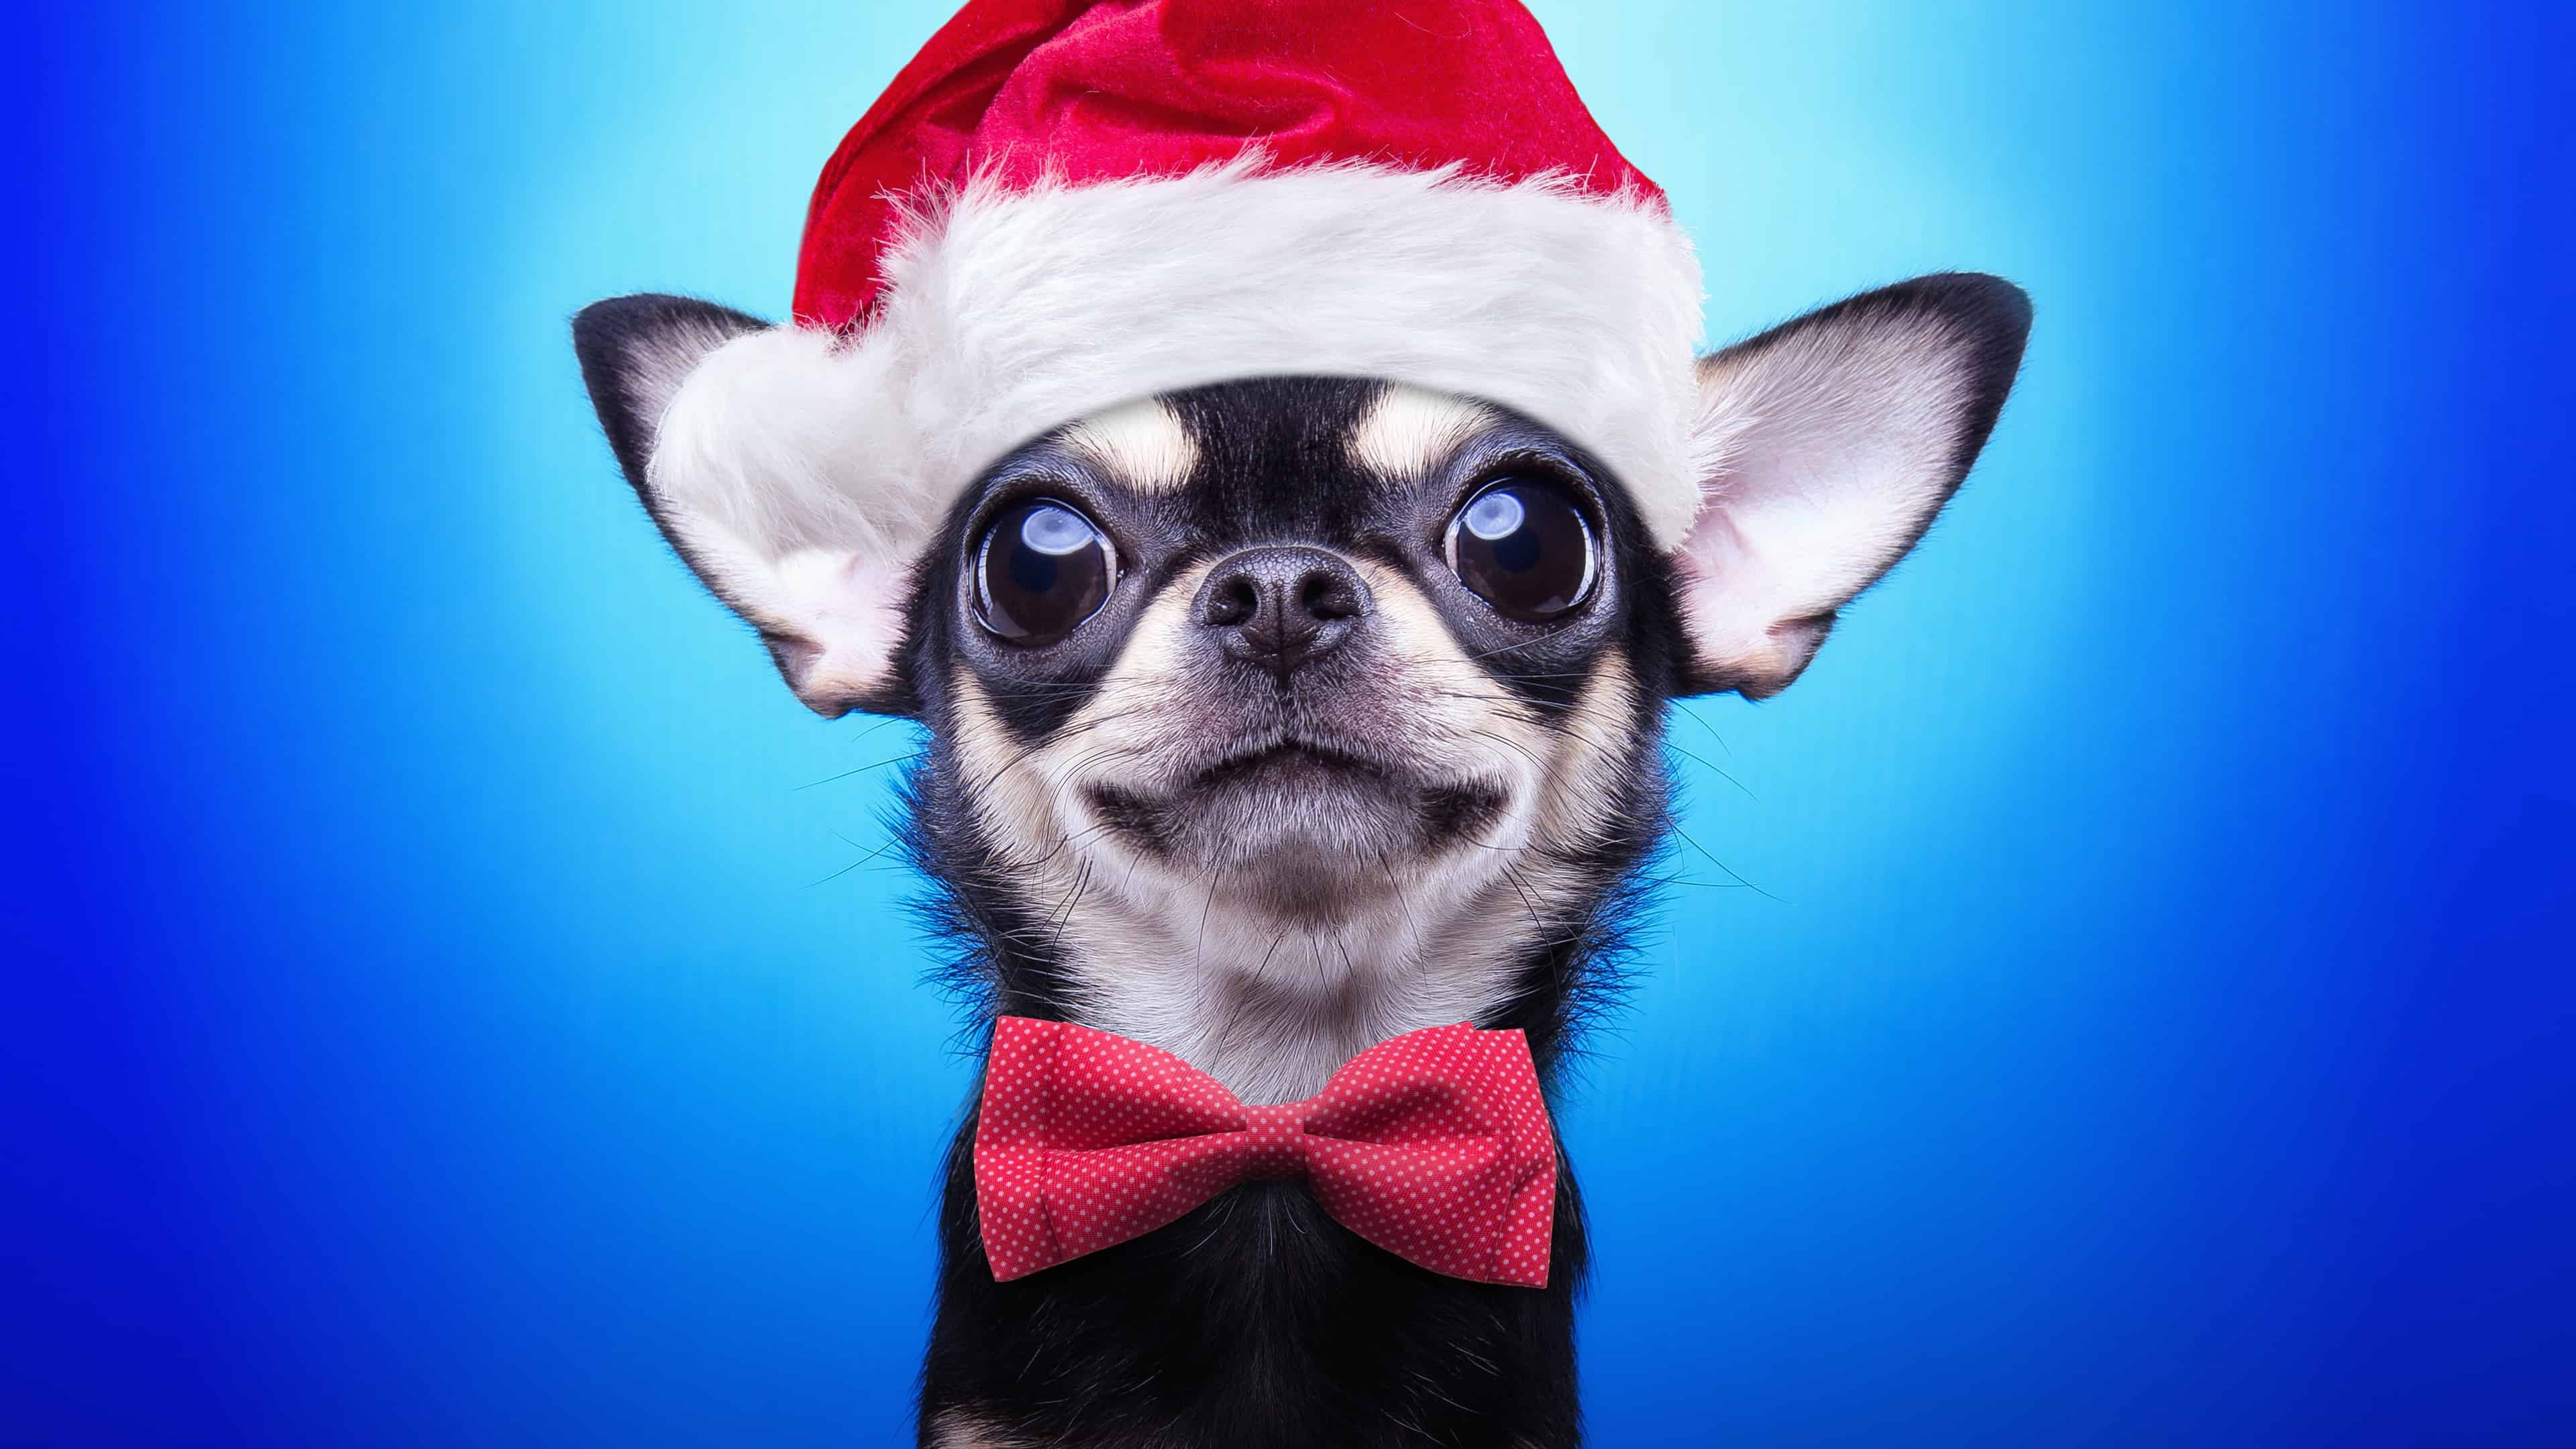 Chihuahua Santa hat, Ultra HD wallpaper, Festive dog, Christmas spirit, 3840x2160 4K Desktop